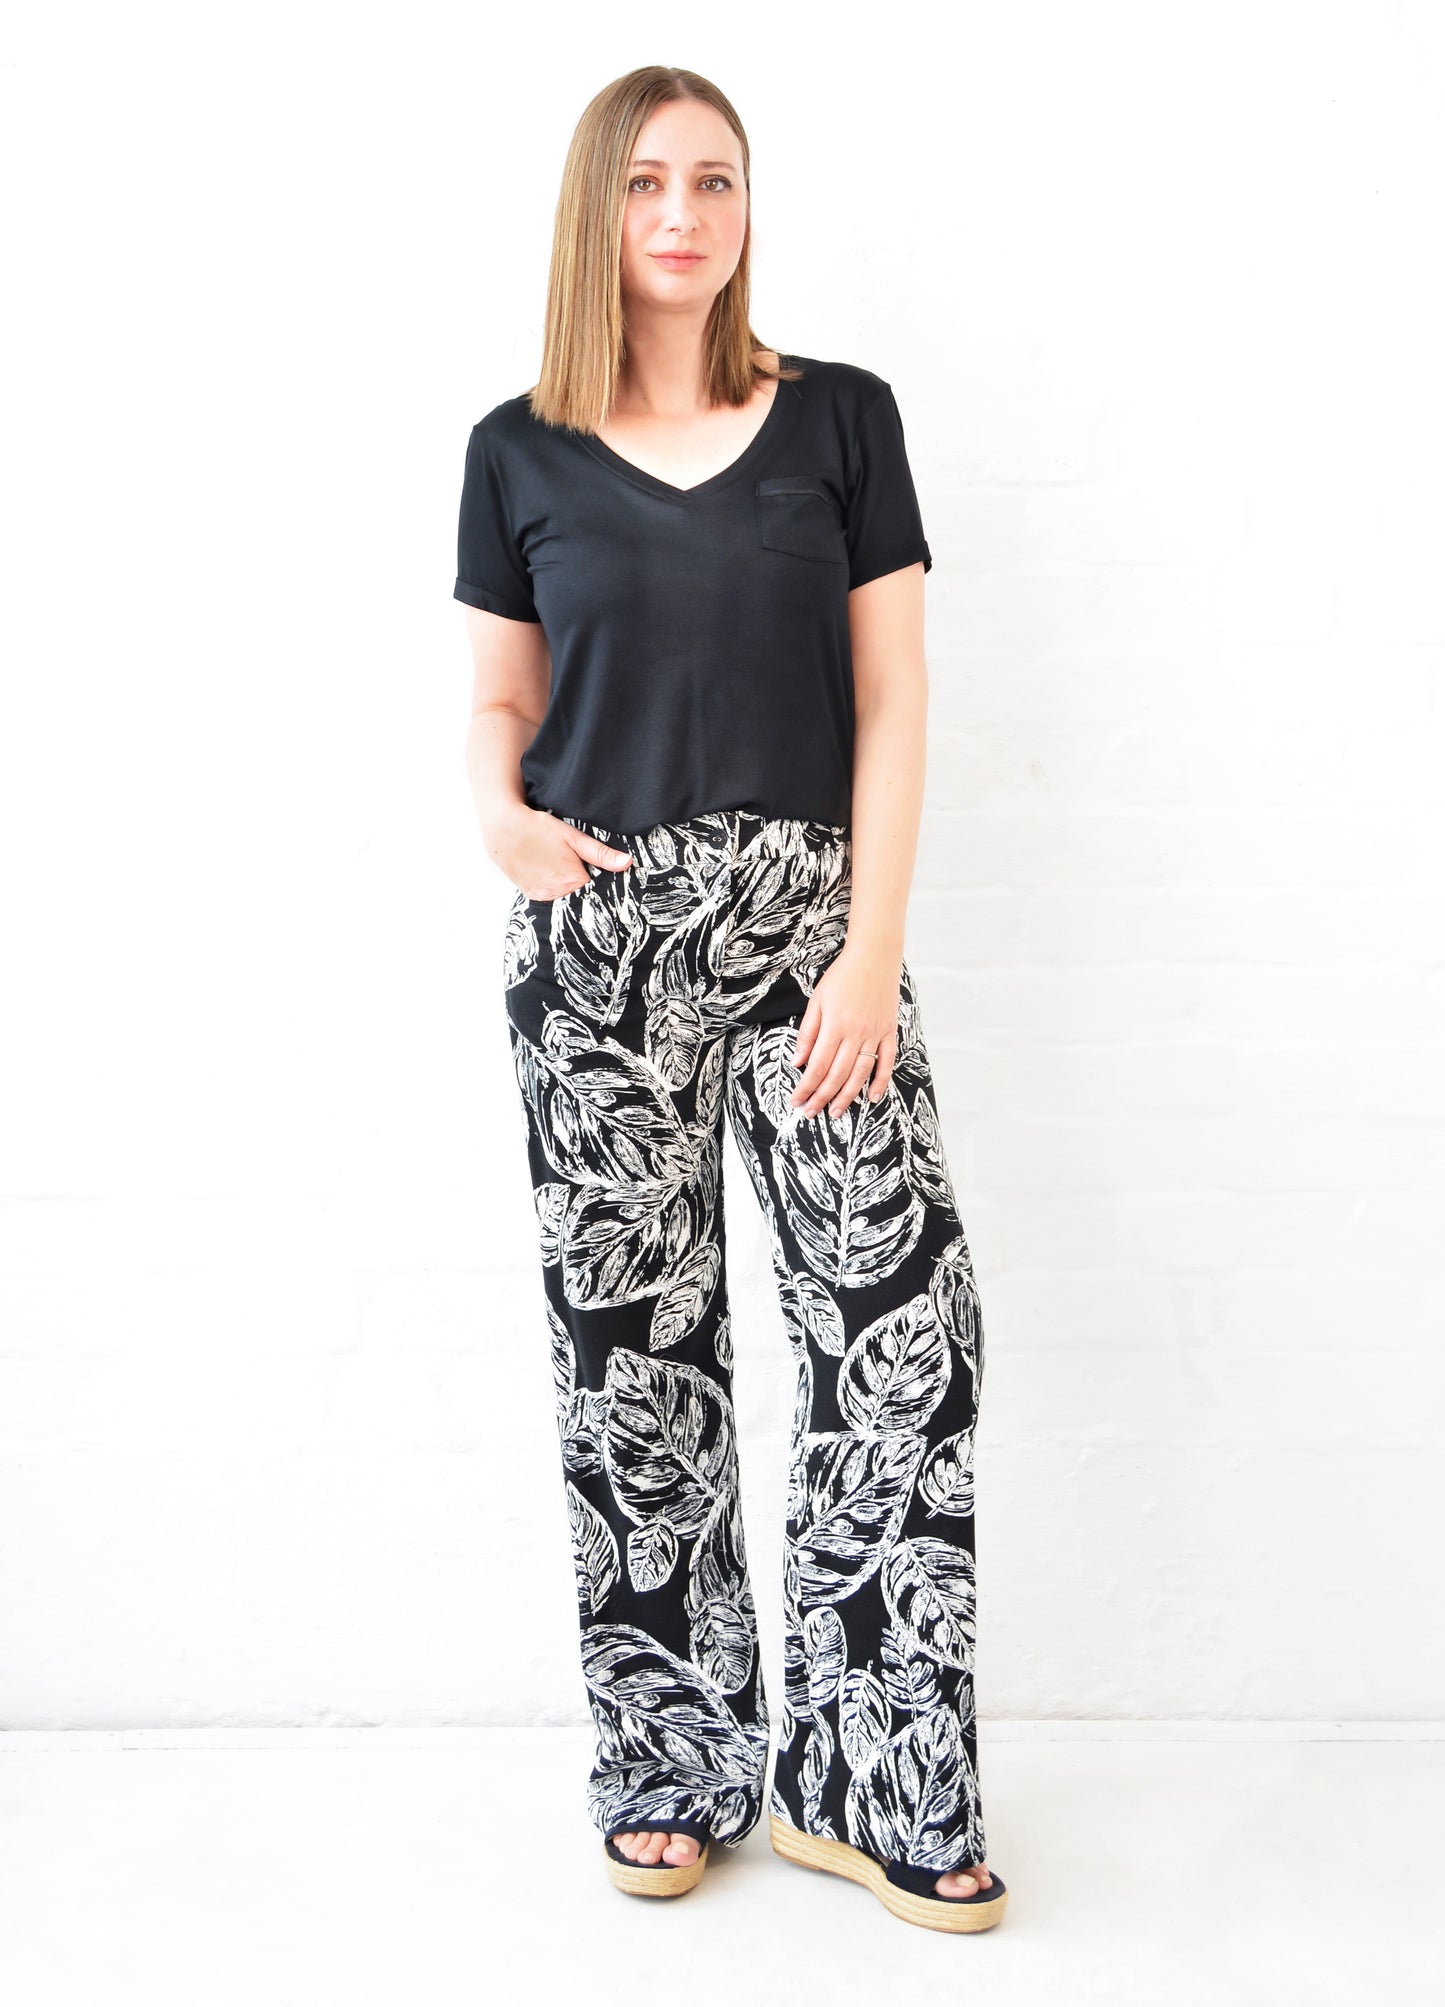 Savannah wide-leg trousers in black Linnea print